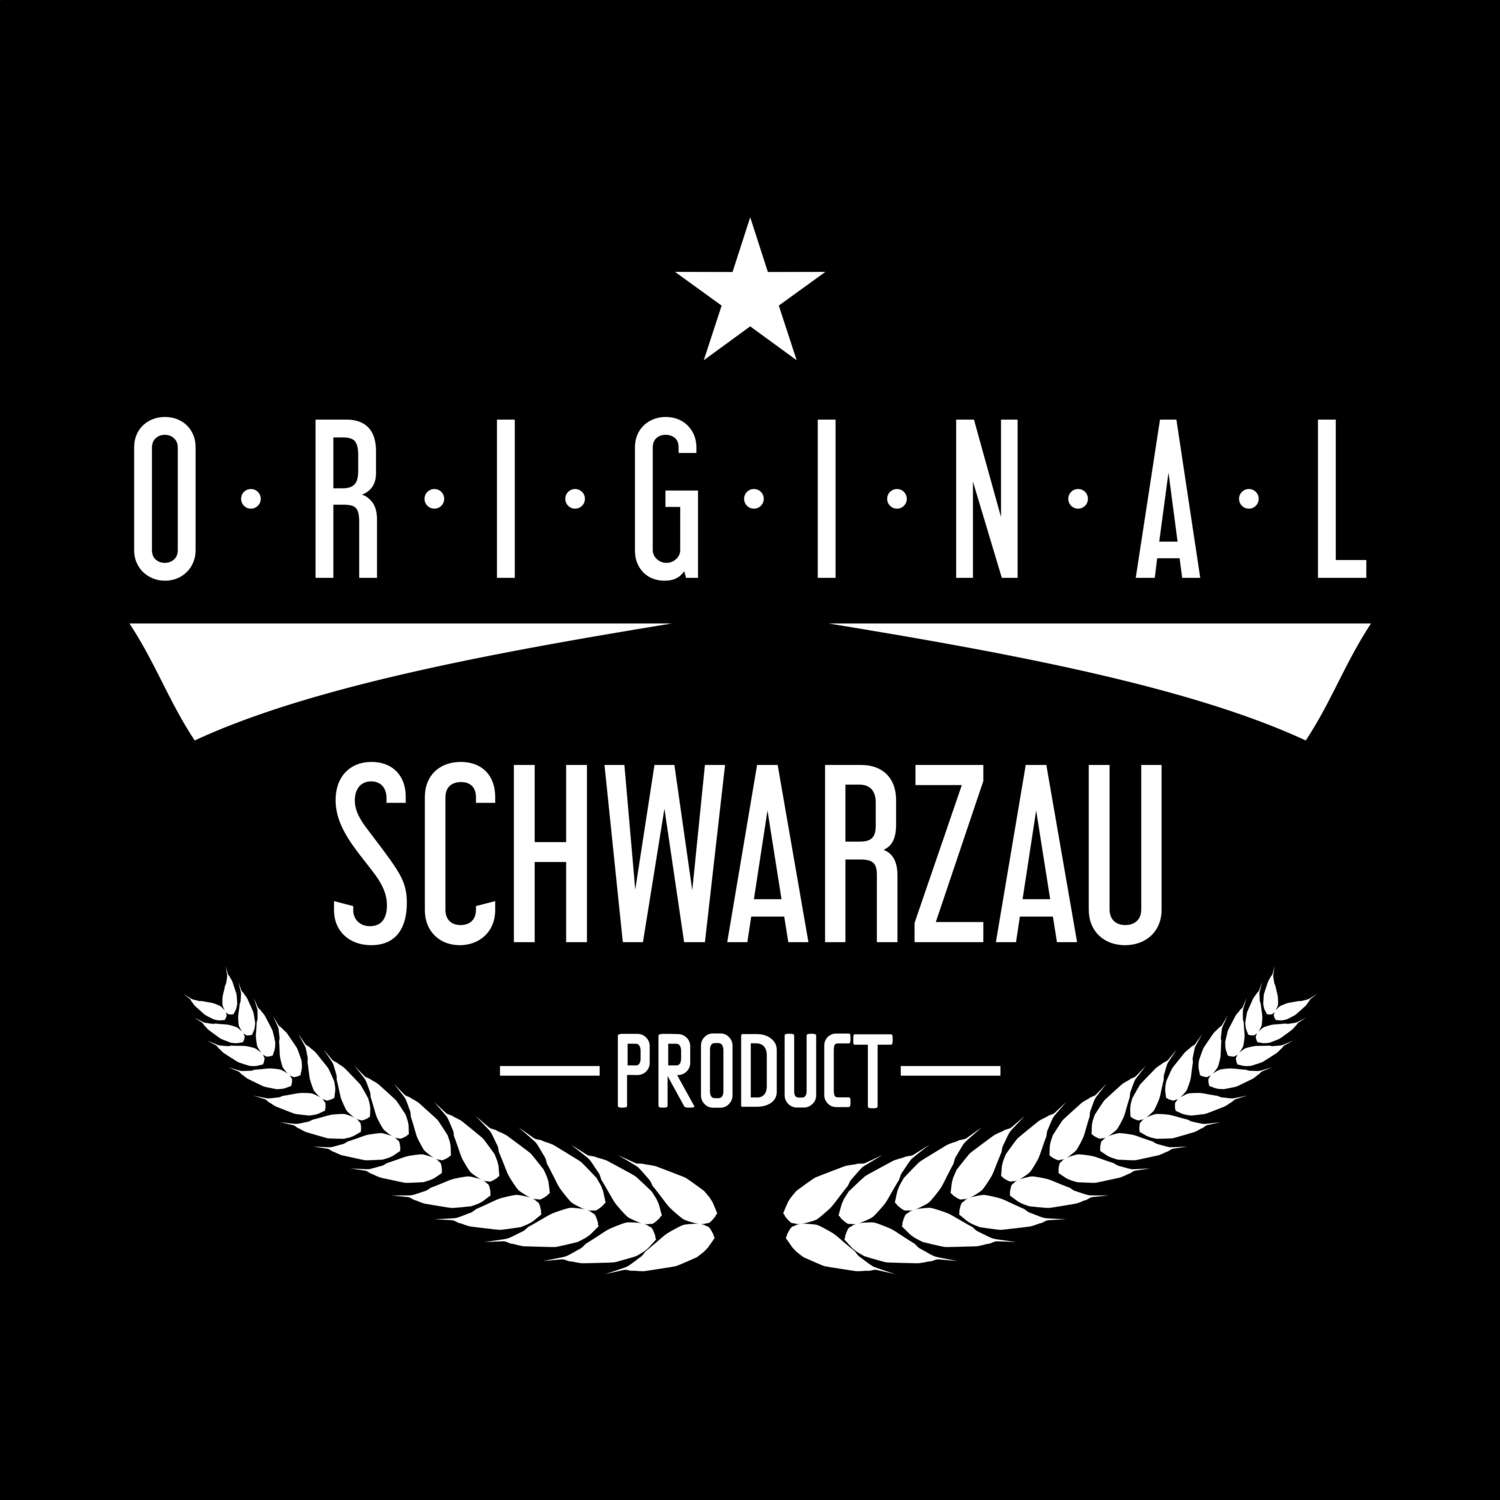 Schwarzau T-Shirt »Original Product«